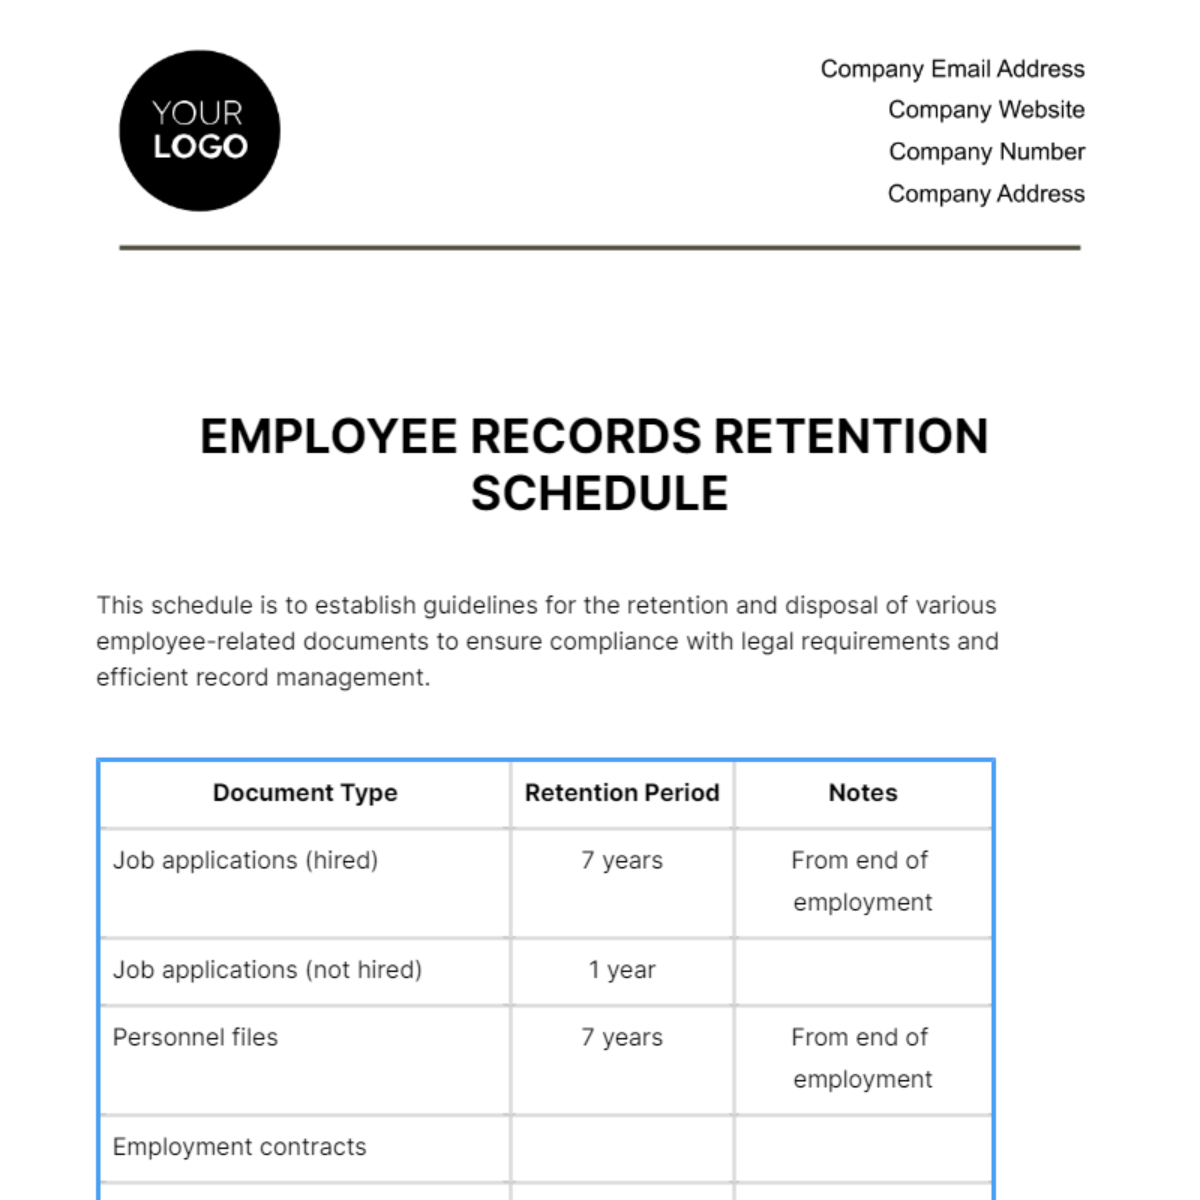 Employee Records Retention Schedule HR Template